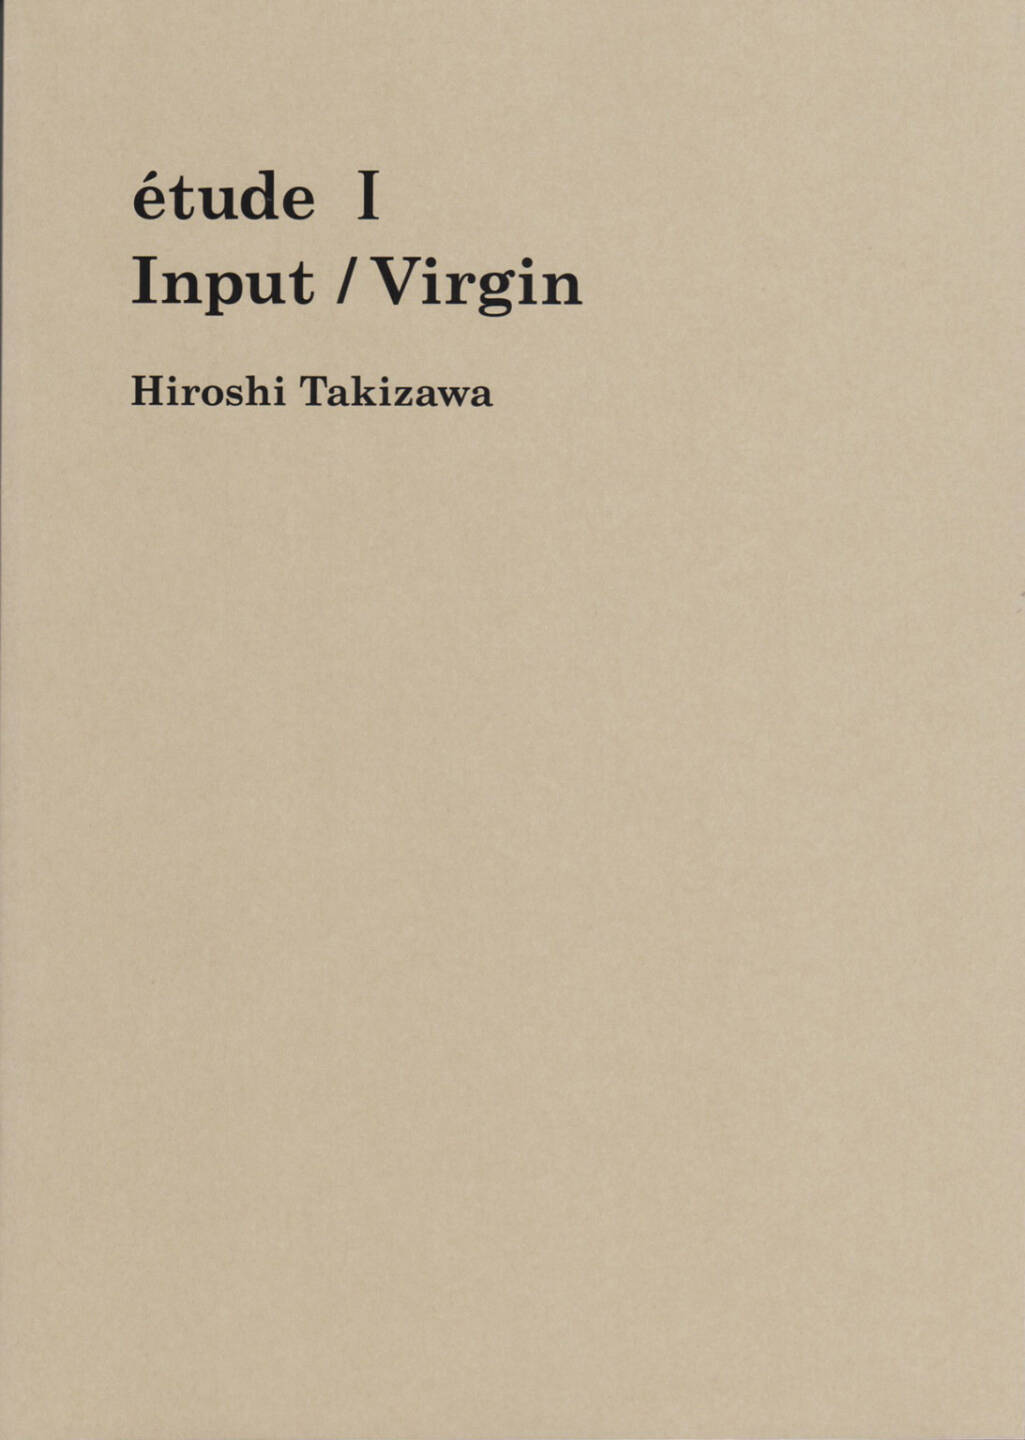 Hiroshi Takizawa - étude I Input / Virgin, Self published 2014, Cover - http://josefchladek.com/book/hiroshi_takizawa_-_etude_i_input_virgin